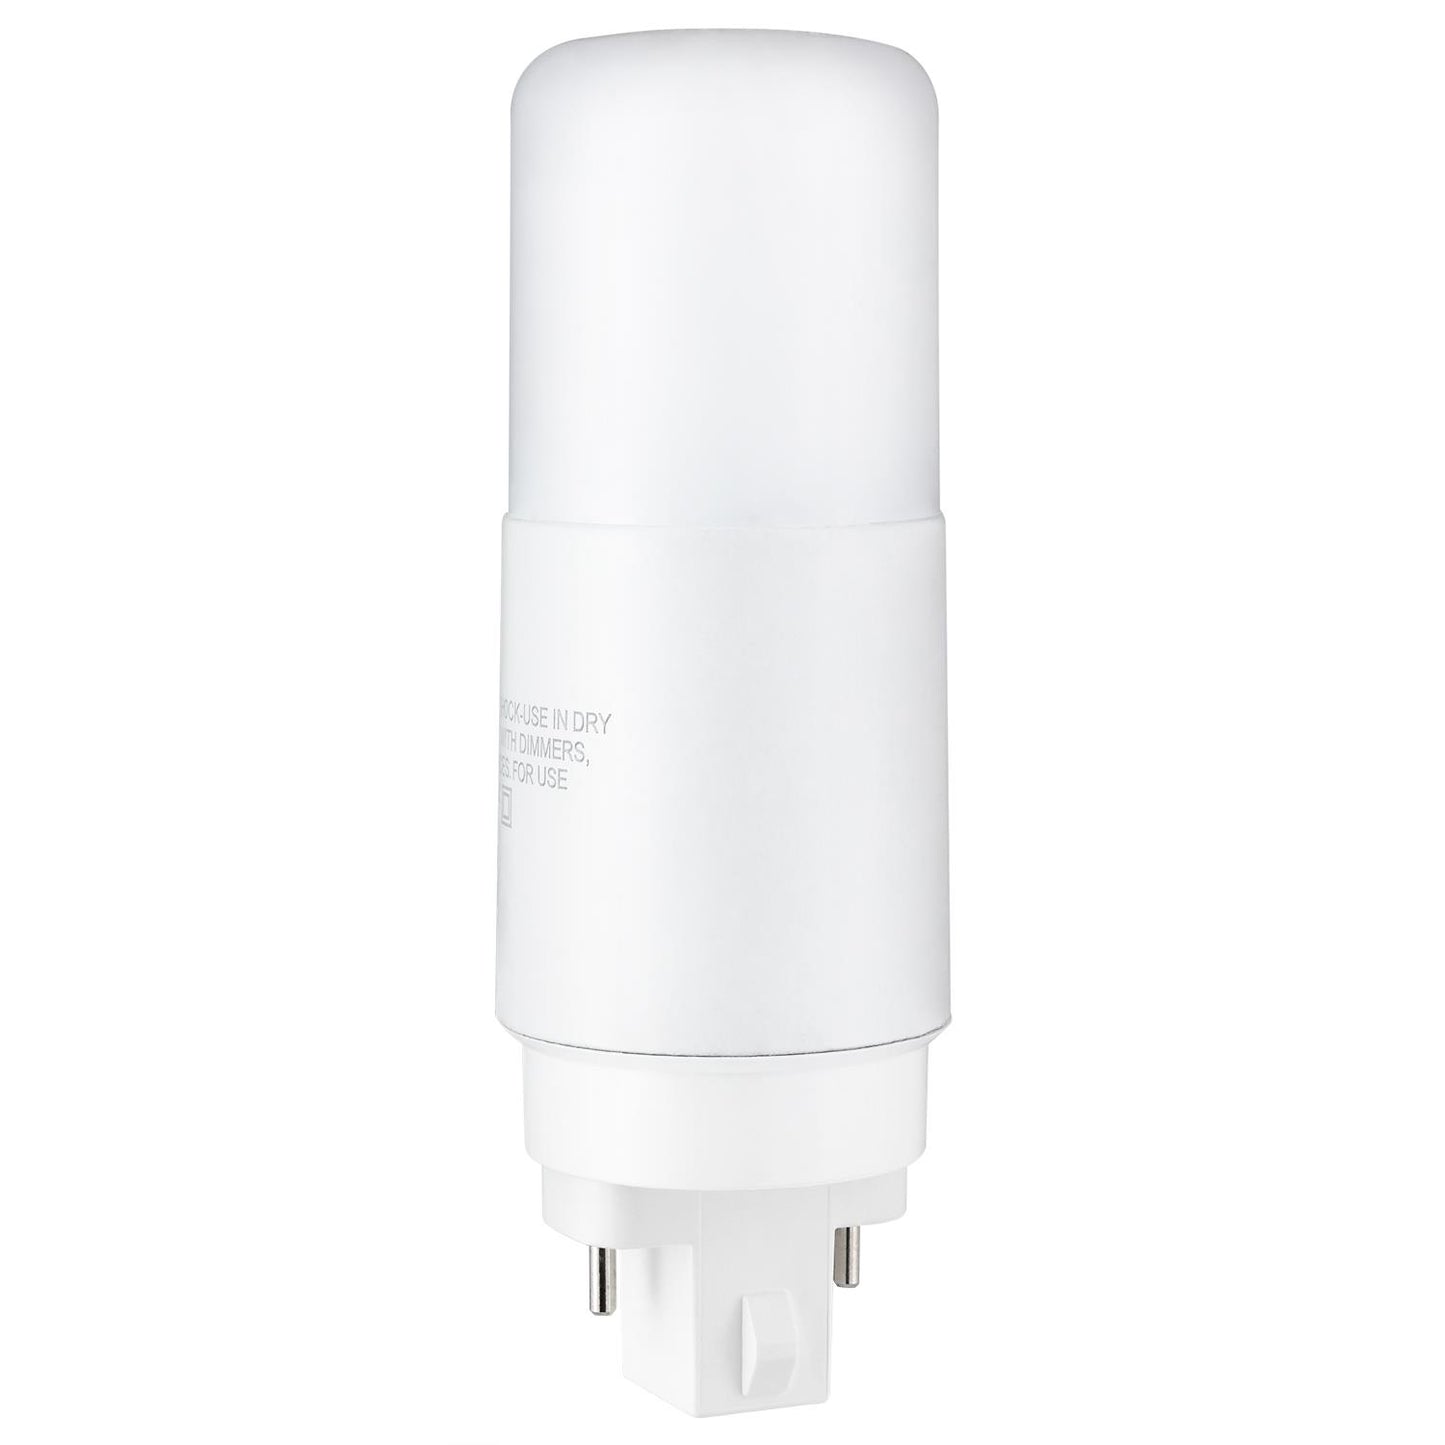 Sunlite G23 LED Bulb, 2-Pin PLV, 7 Watt, Cool White (4000K), Full 360 Degree Illumination, 13 Watt CFL Replacement (Ballast Bypass Required)